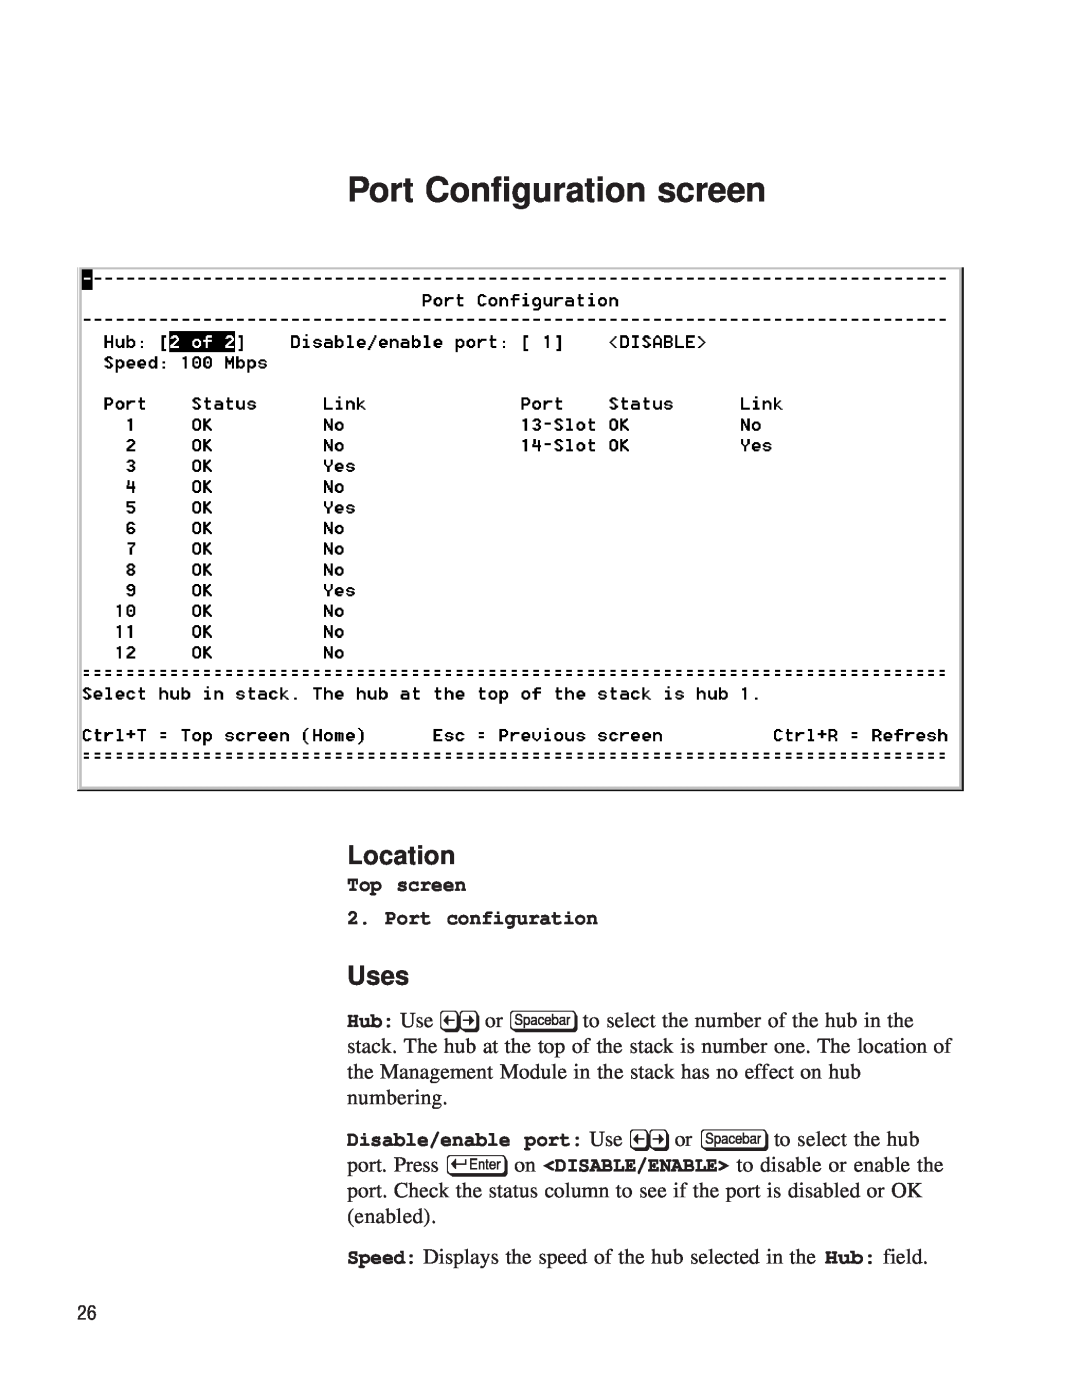 Intel EE110MM manual Port Configuration screen, Top screen 2. Port configuration, Location, Uses 